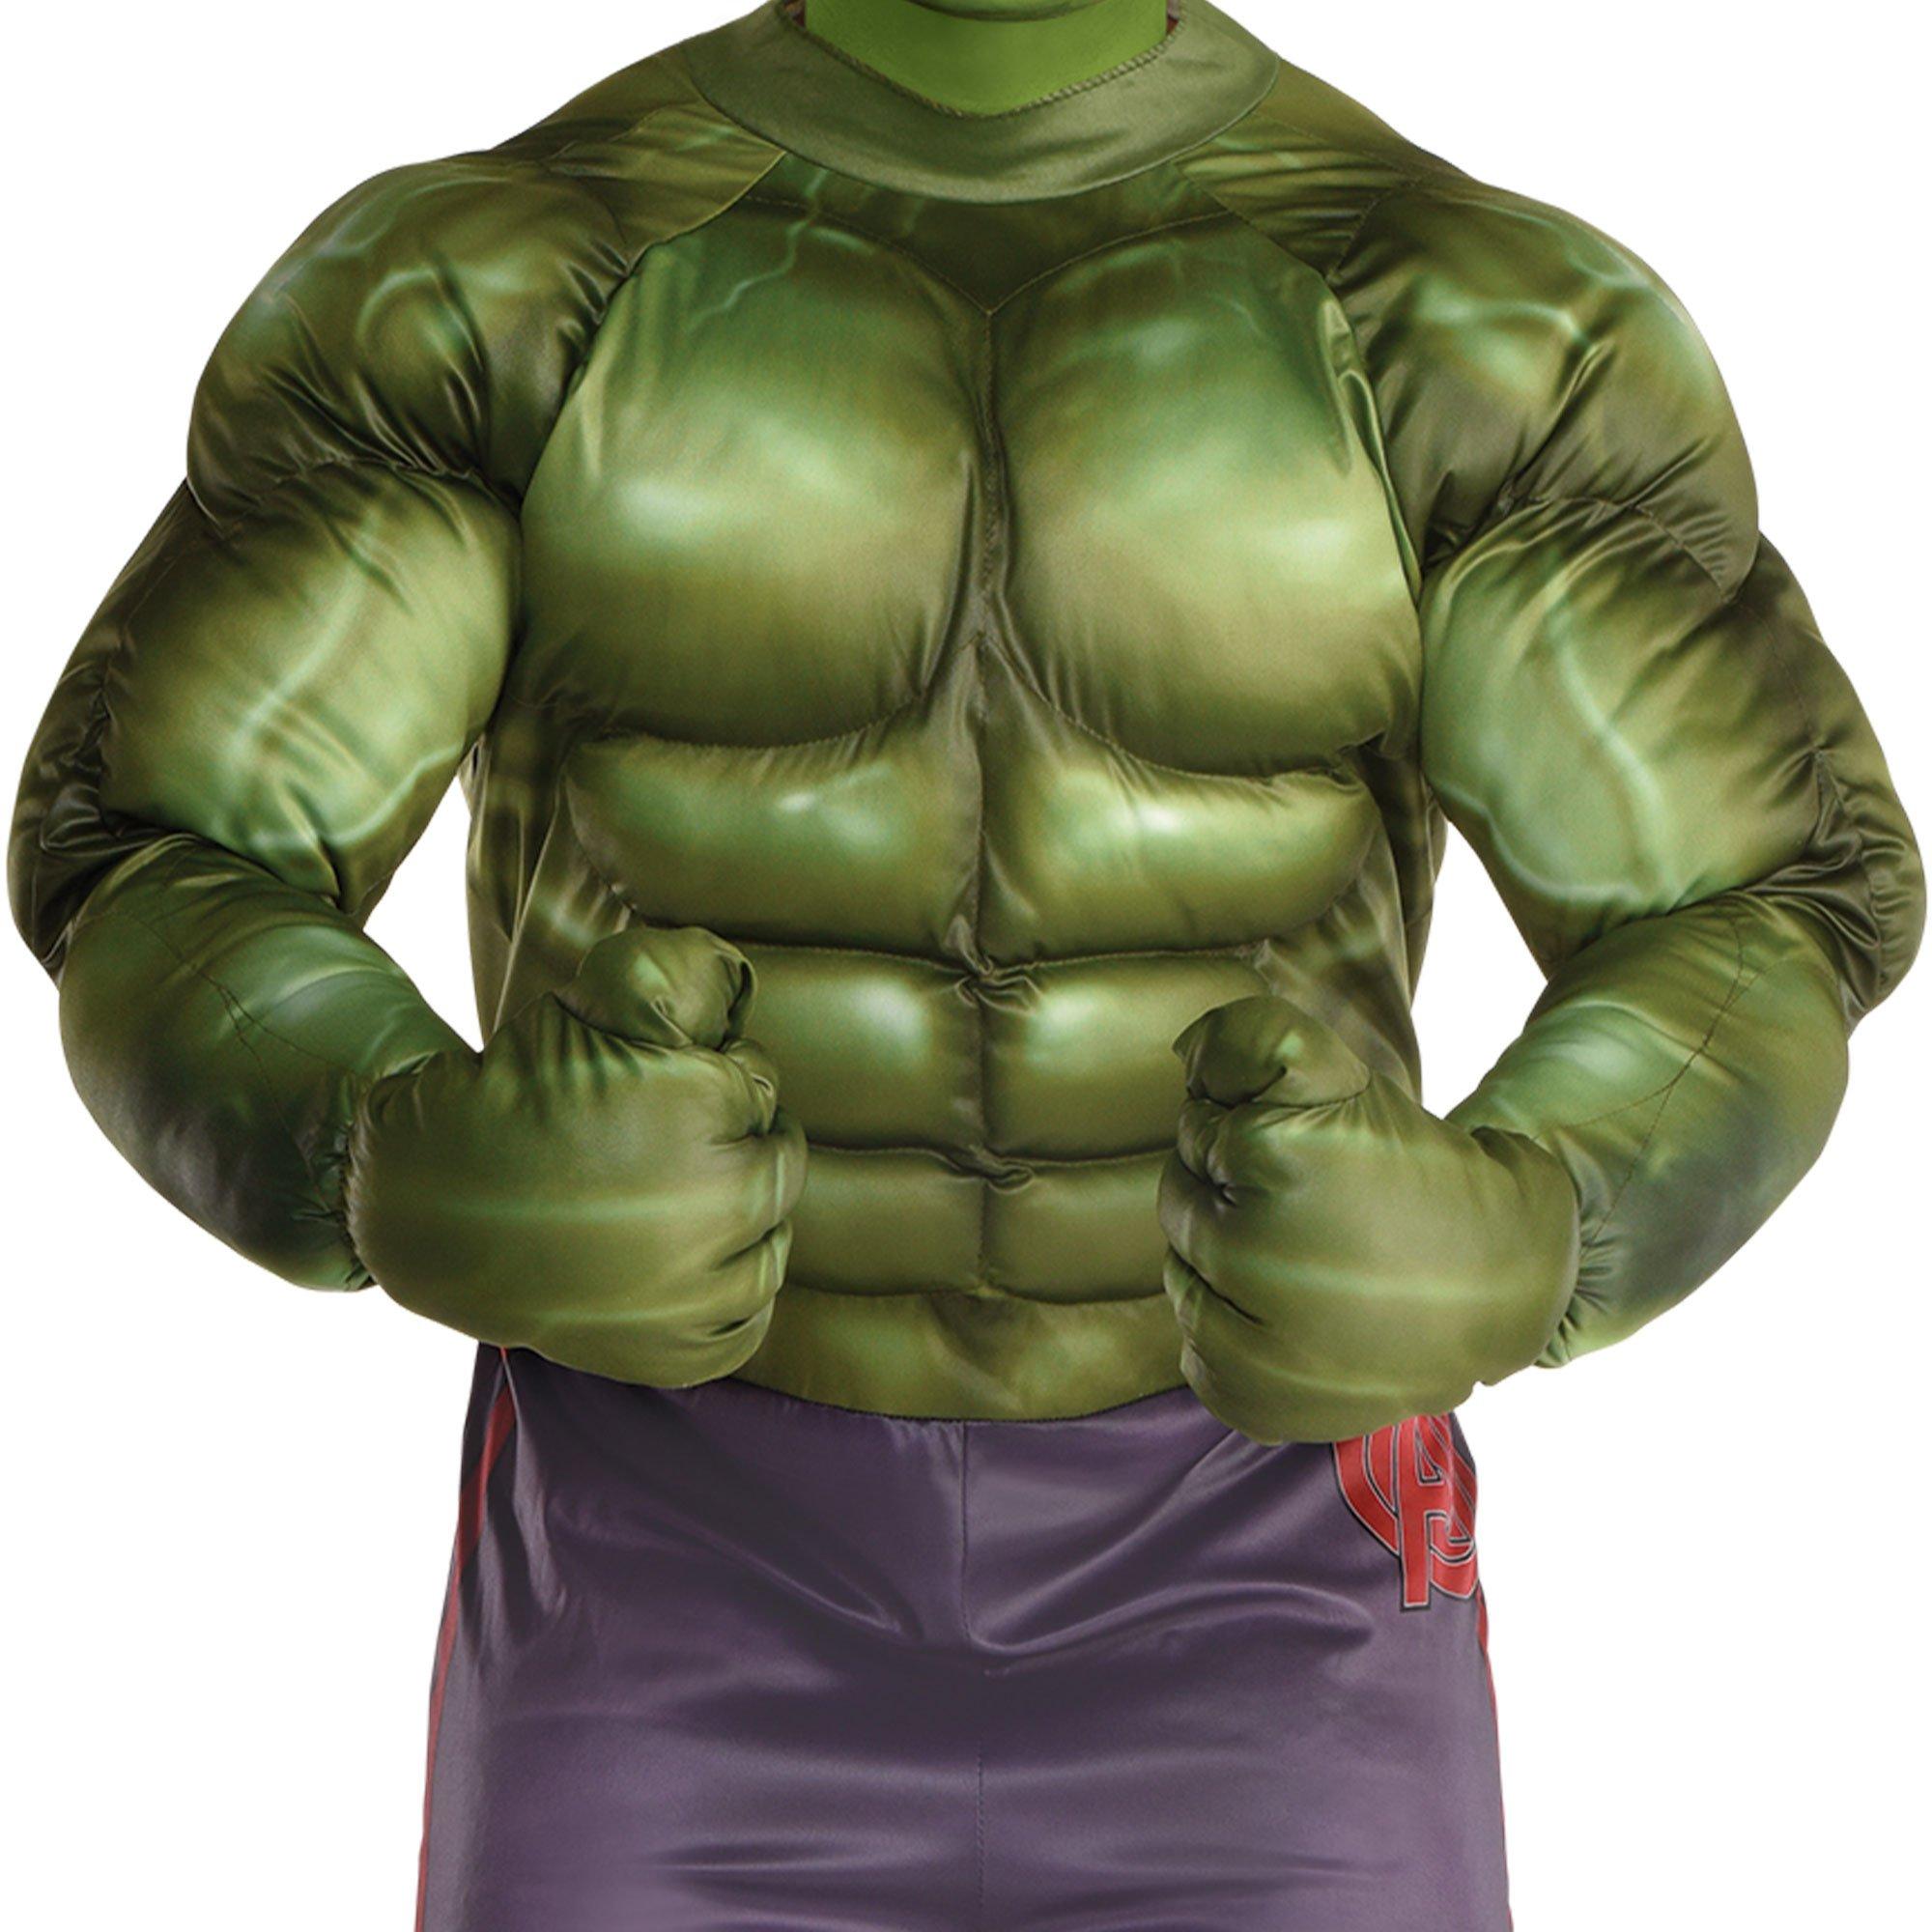 Hulk costume ,marvel,hulk smash  Hulk costume, Incredible hulk costume,  Hulk marvel